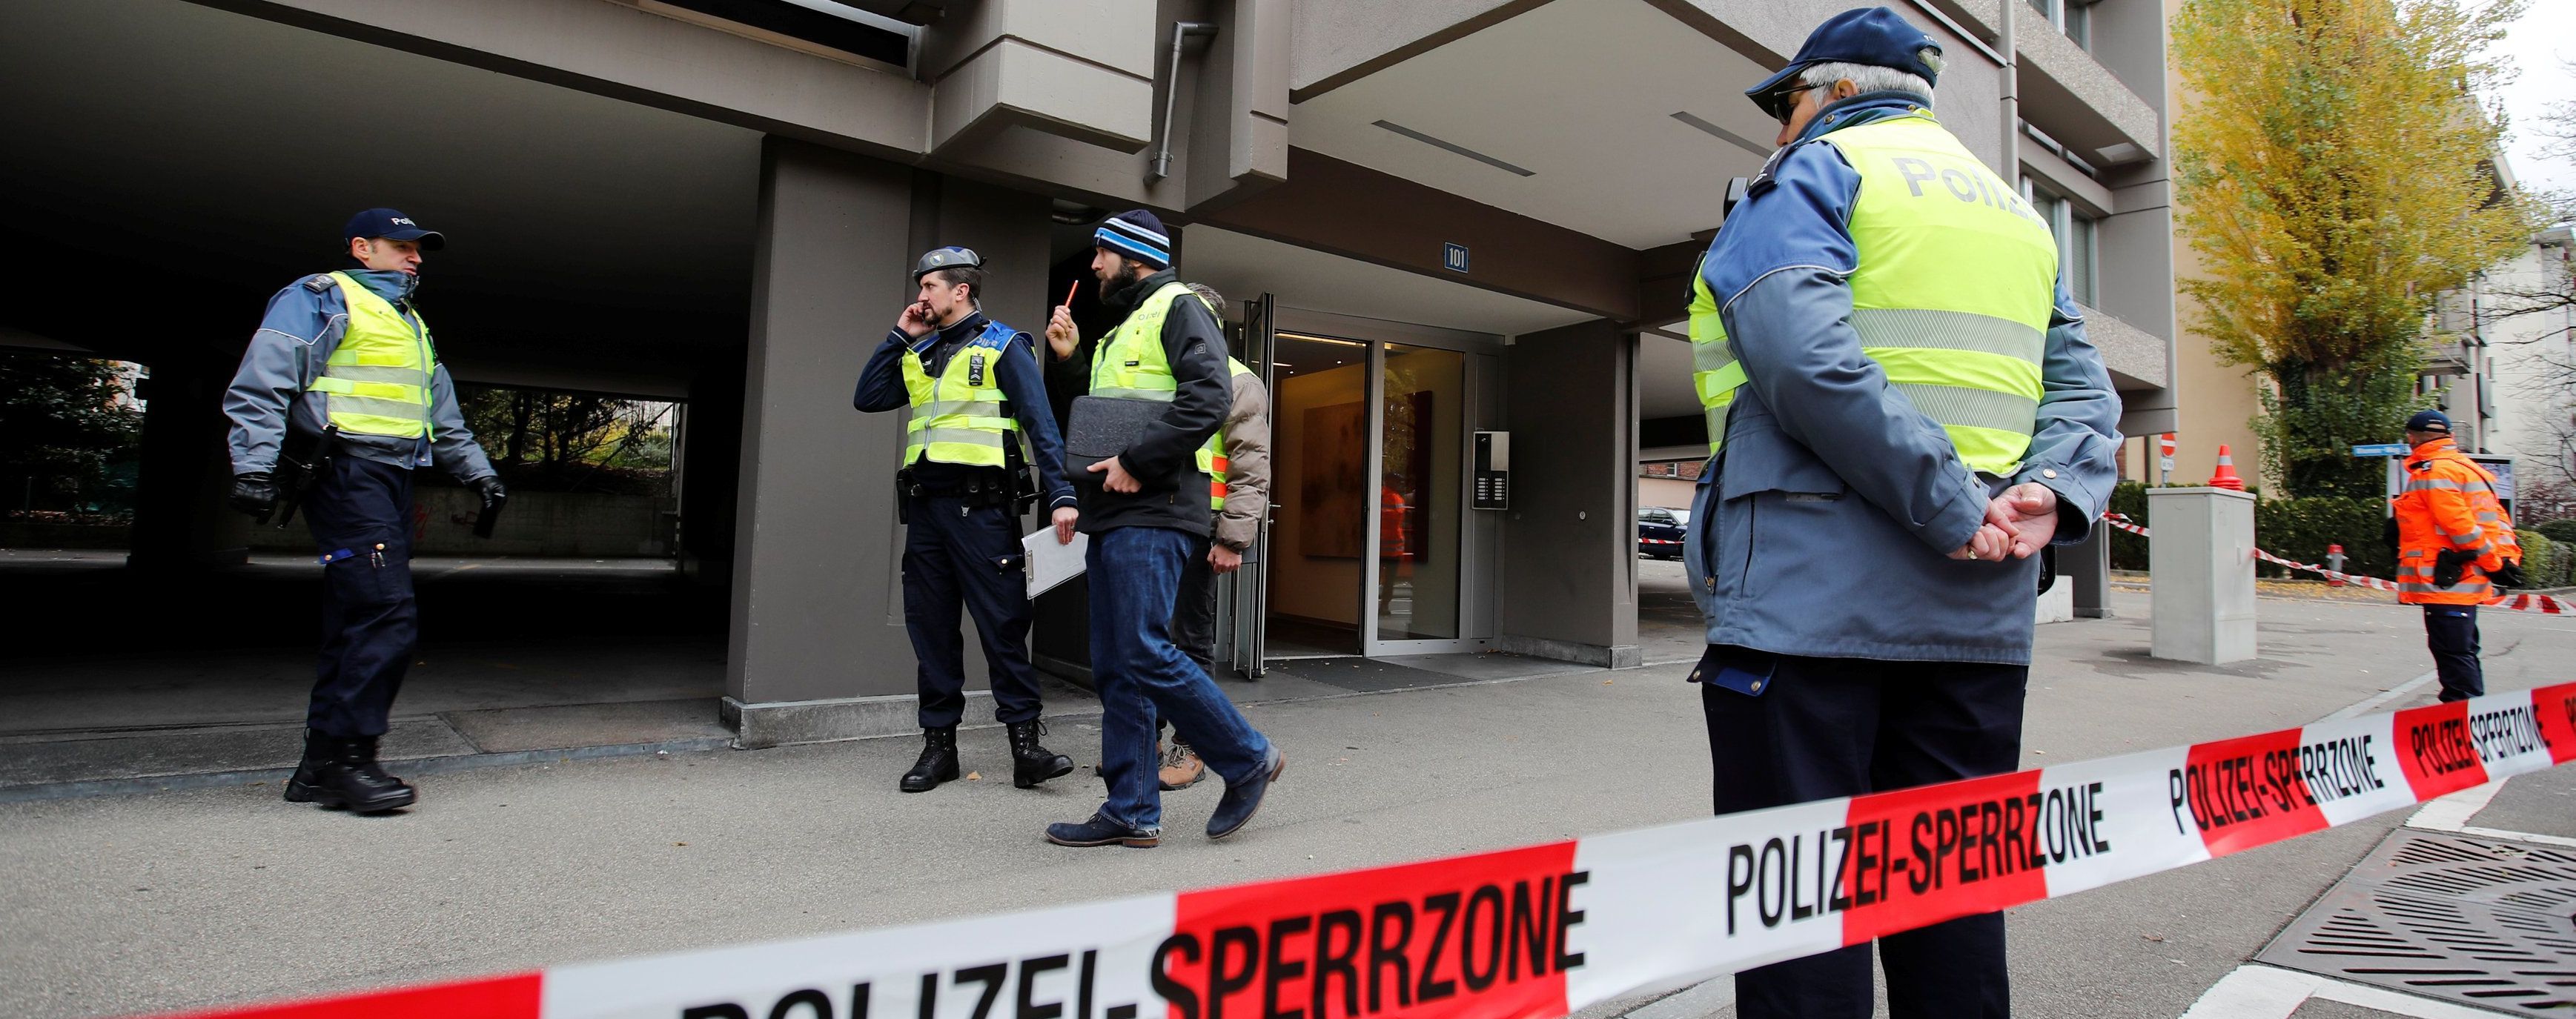 В Германии пьяный мужчина напал с ножом на мэра